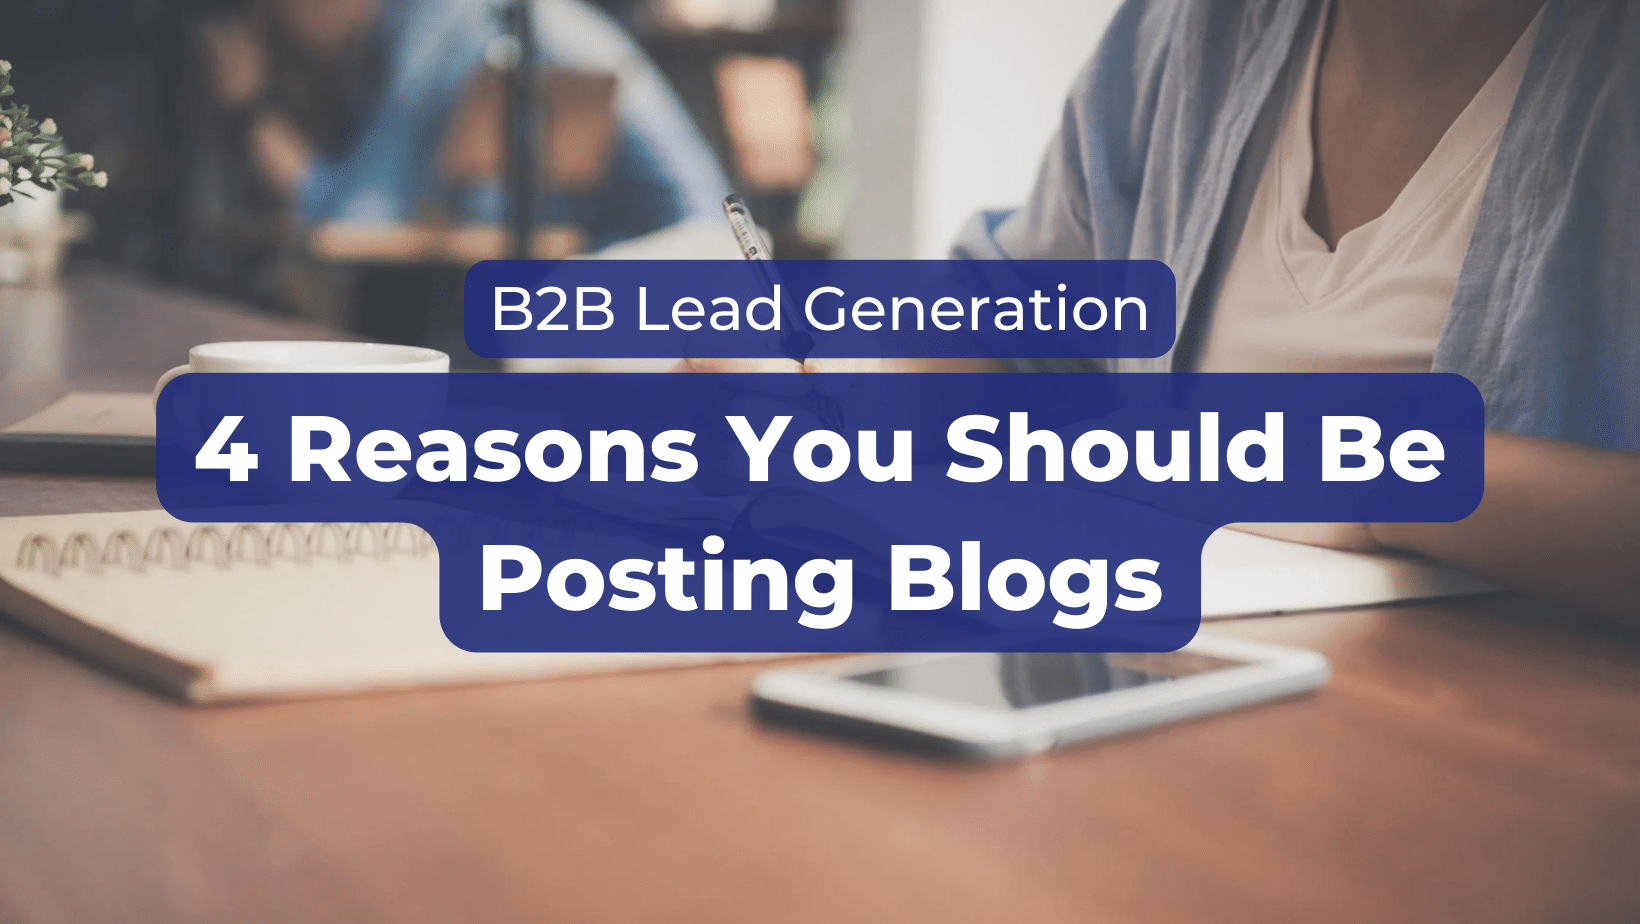 B2B Lead Generation: 4 Reasons You Should Be Posting Blogs